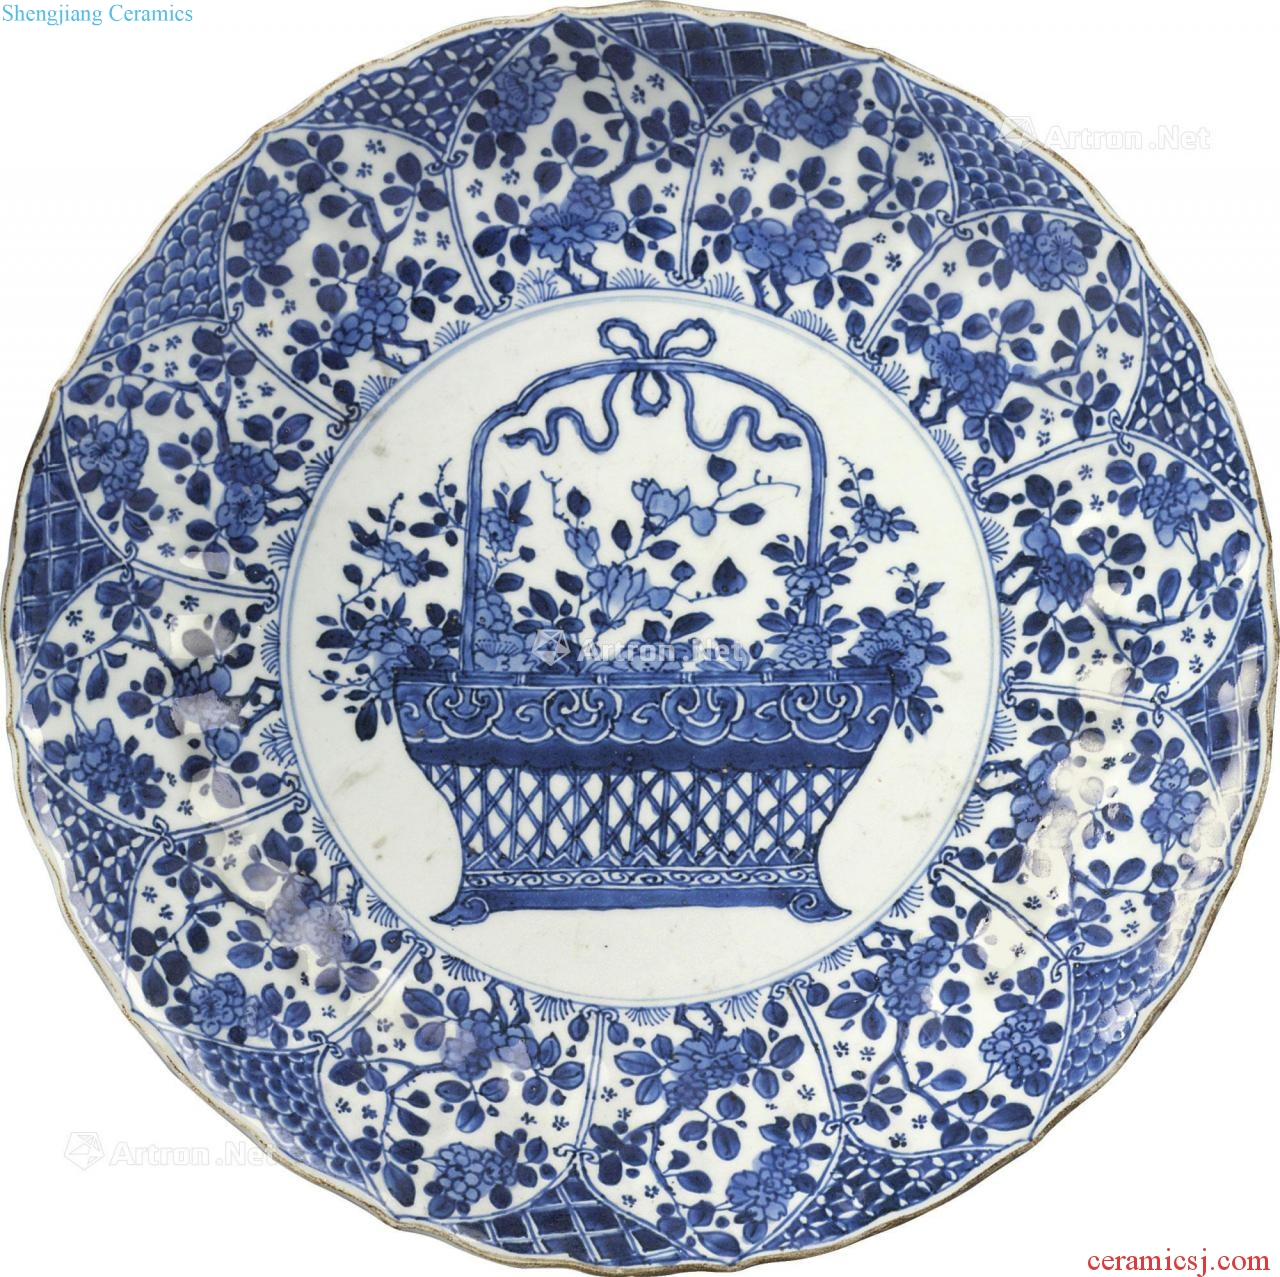 The qing emperor kangxi Blue and white flower basket figure fancy the broader market